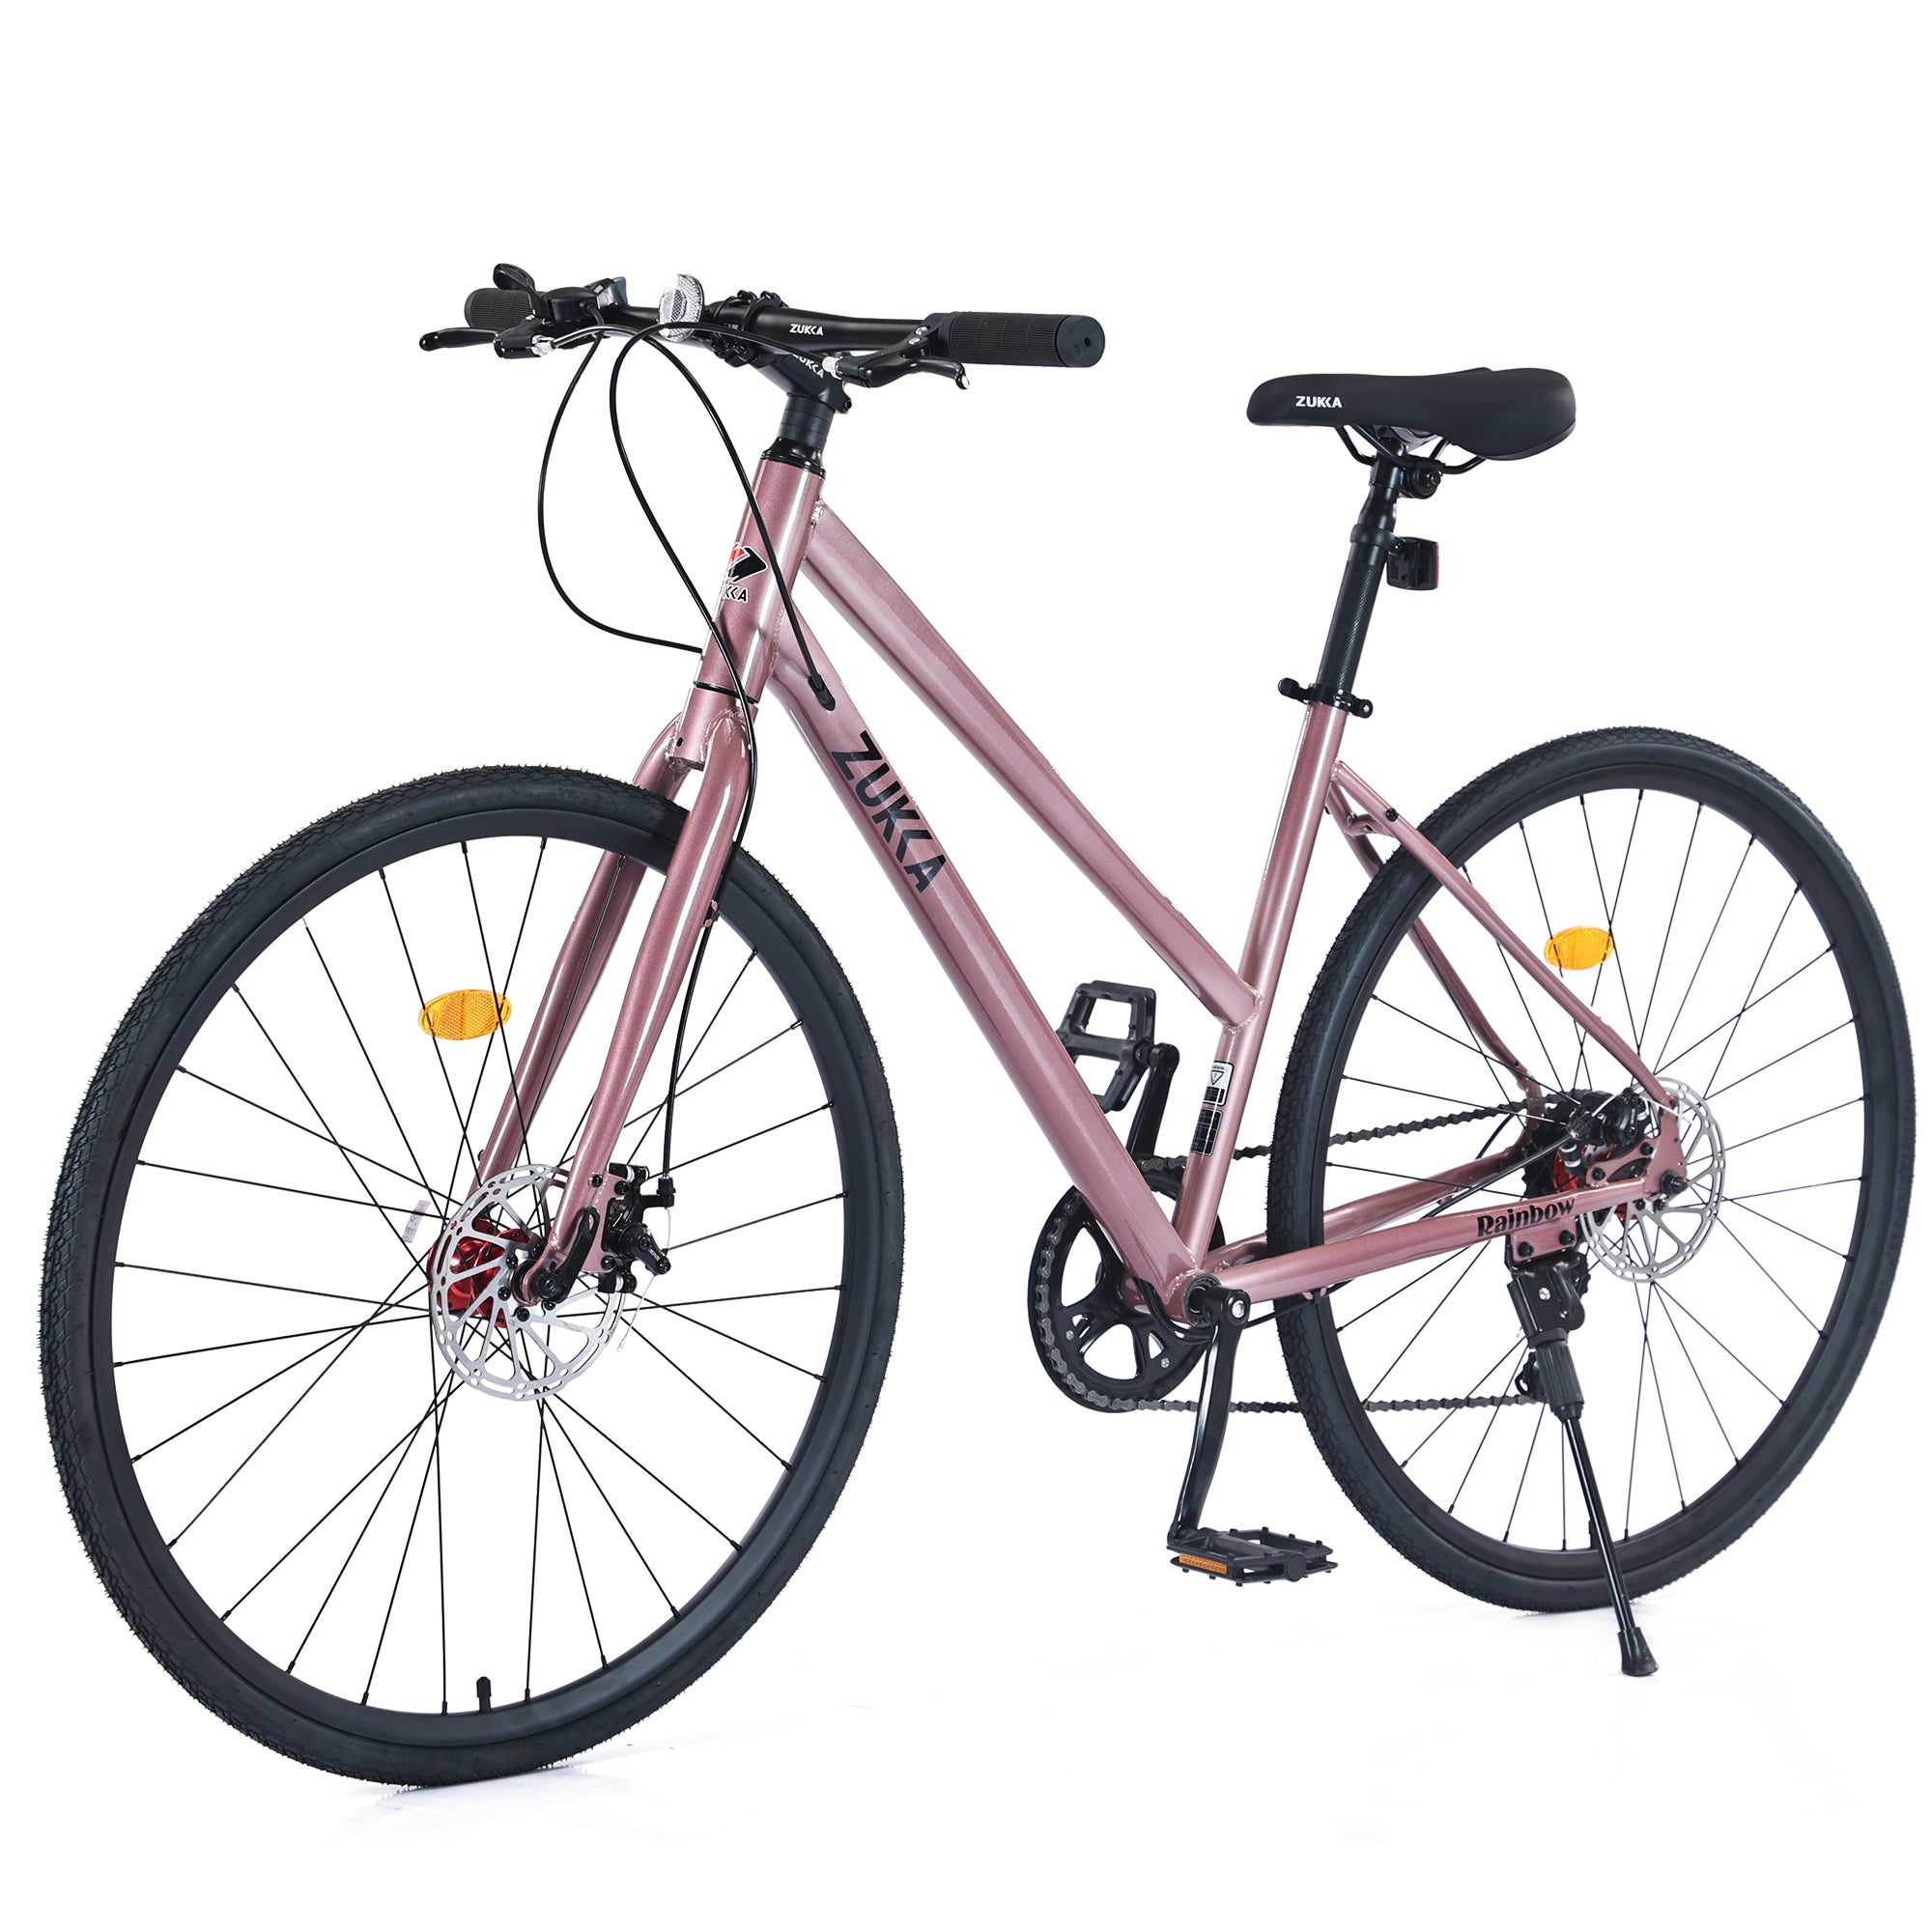 7-Speed-Hybrid-bike-Disc-Brake-700C-Road-Bike-For-men-women's-City-Bicycle-